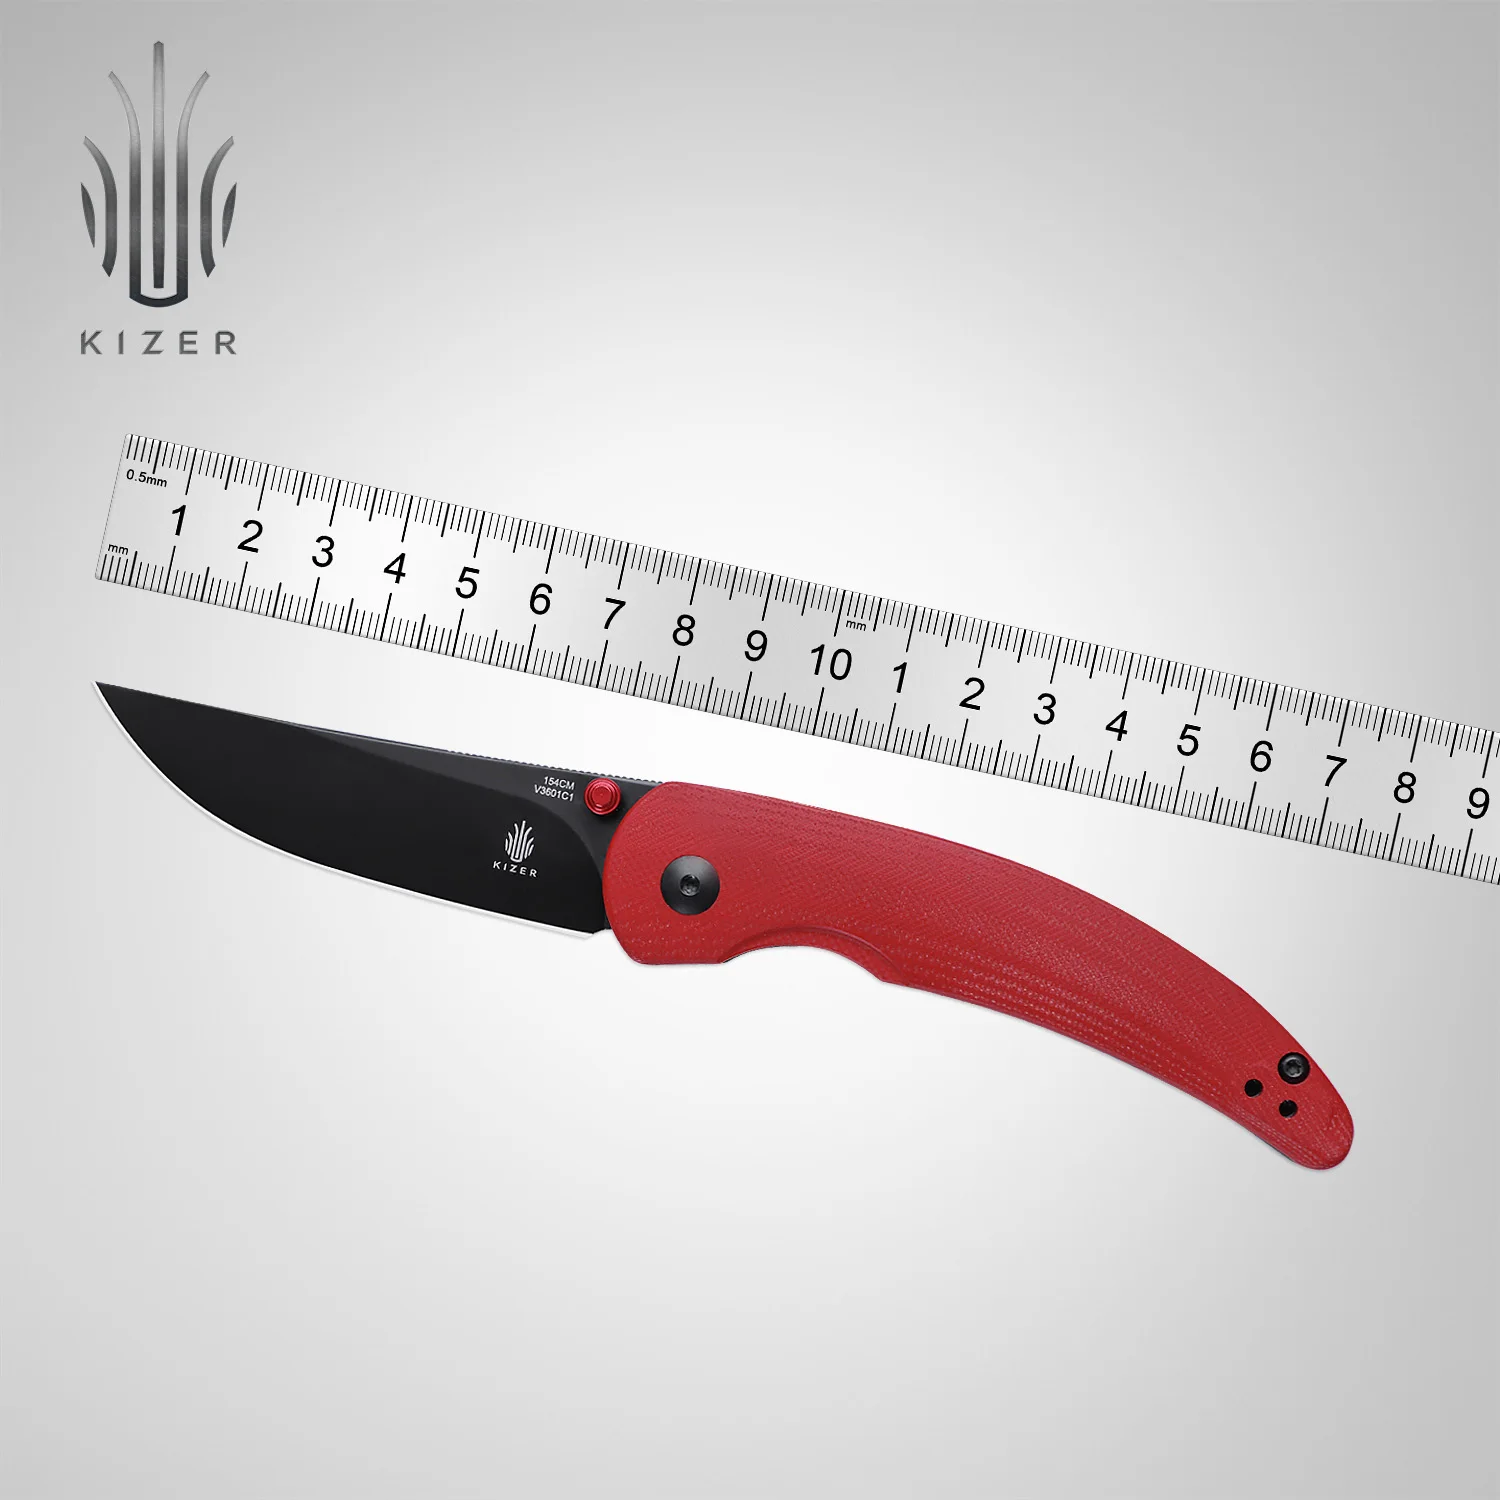 Kizer Knife Folding V3601C1 Chili Pepper 2022 New Pocket Knife with Black 154CM Steel Blade High Quality EDC Tools